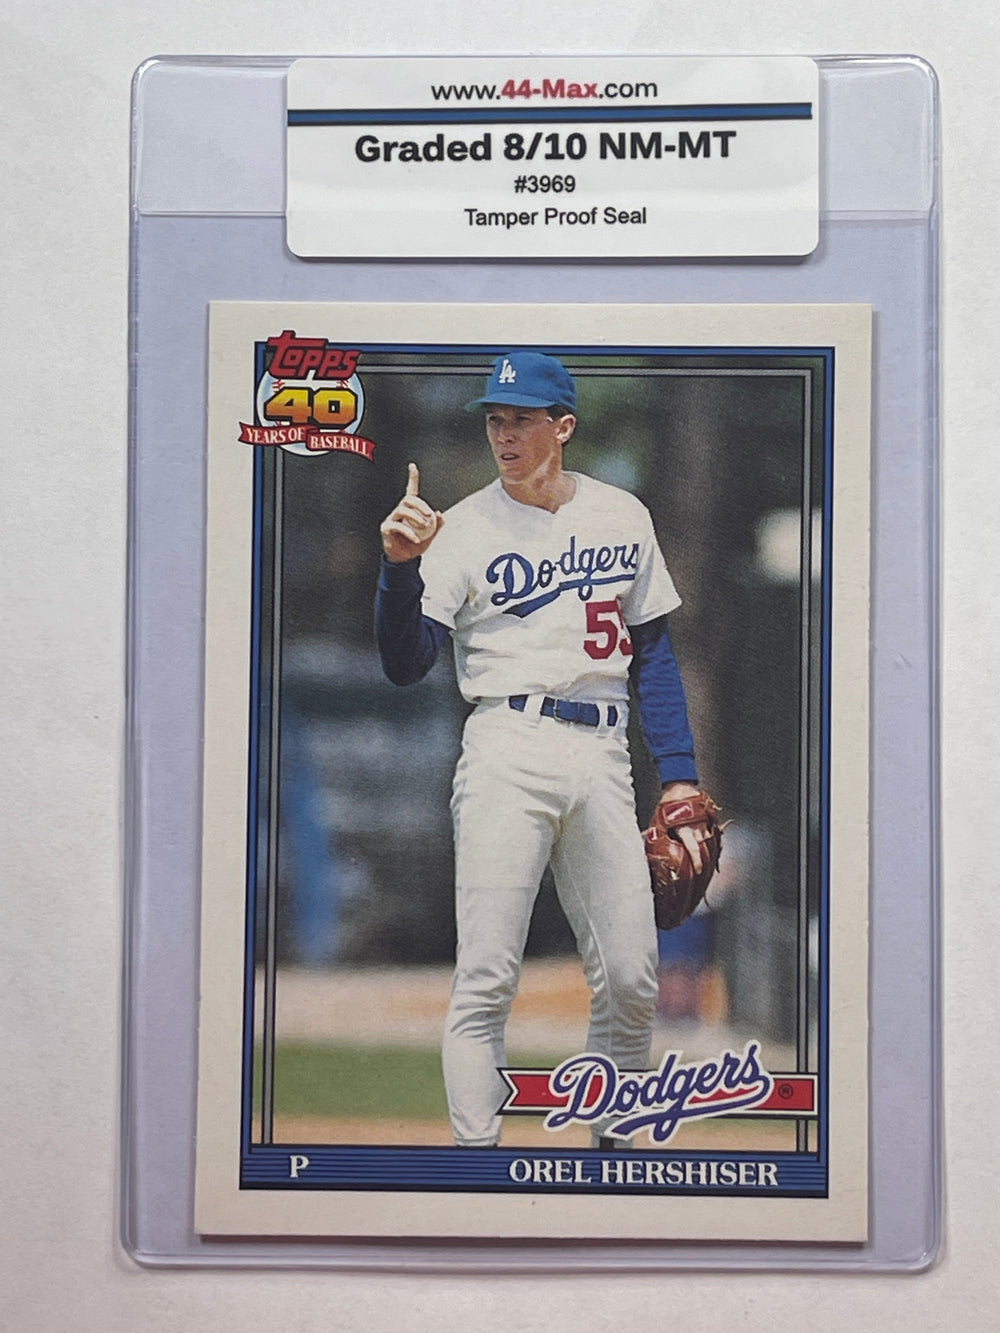 Orel Hershiser 1991 O-Pee-Chee Baseball Card. 44-Max 8/10 NM-MT #3969